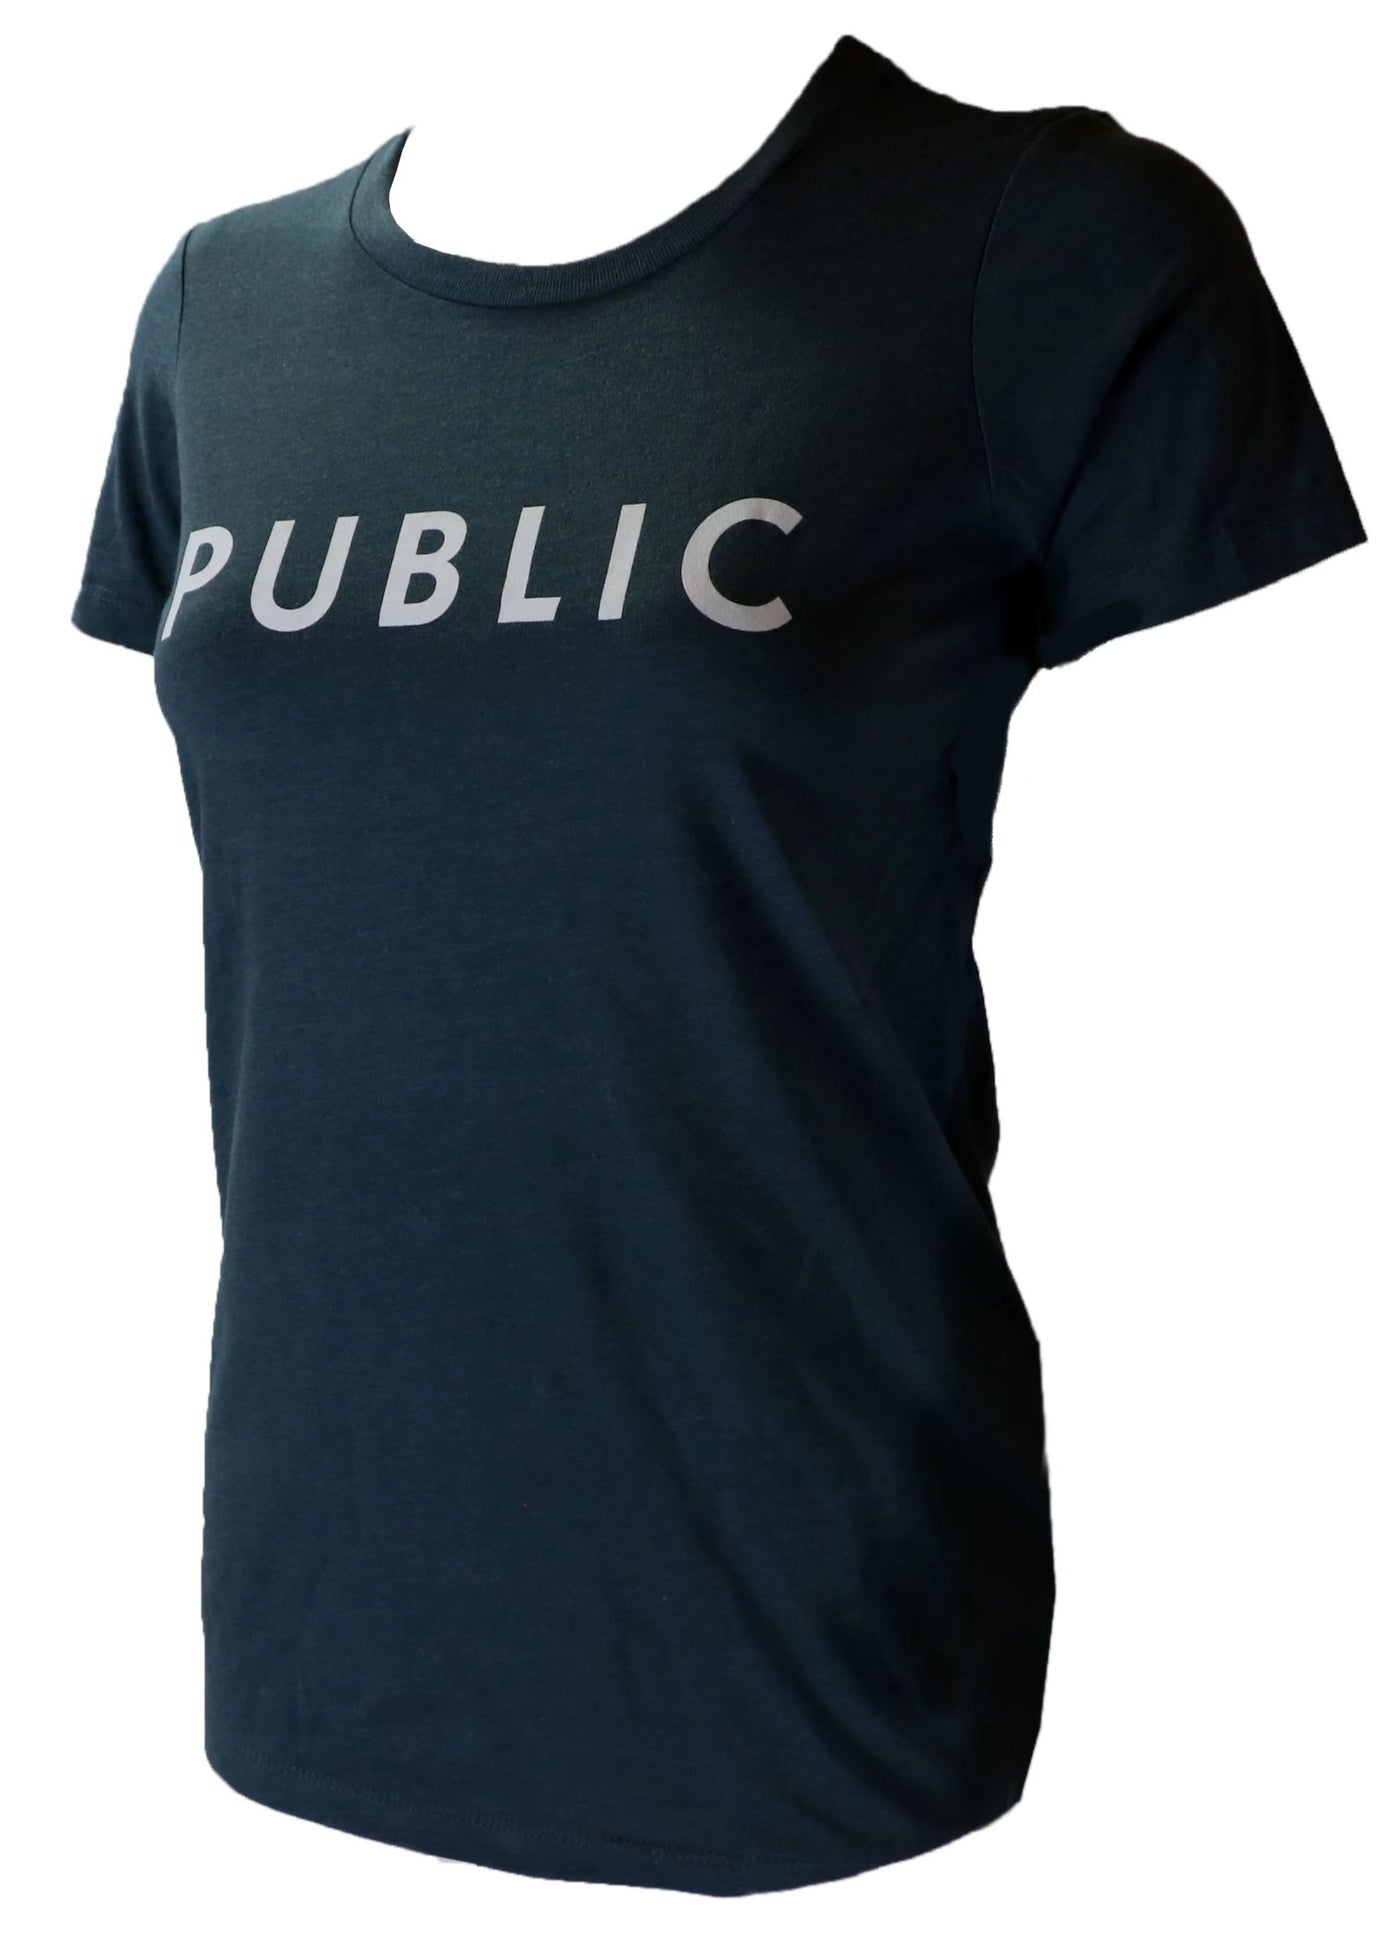 Public T-Shirt (Women's)